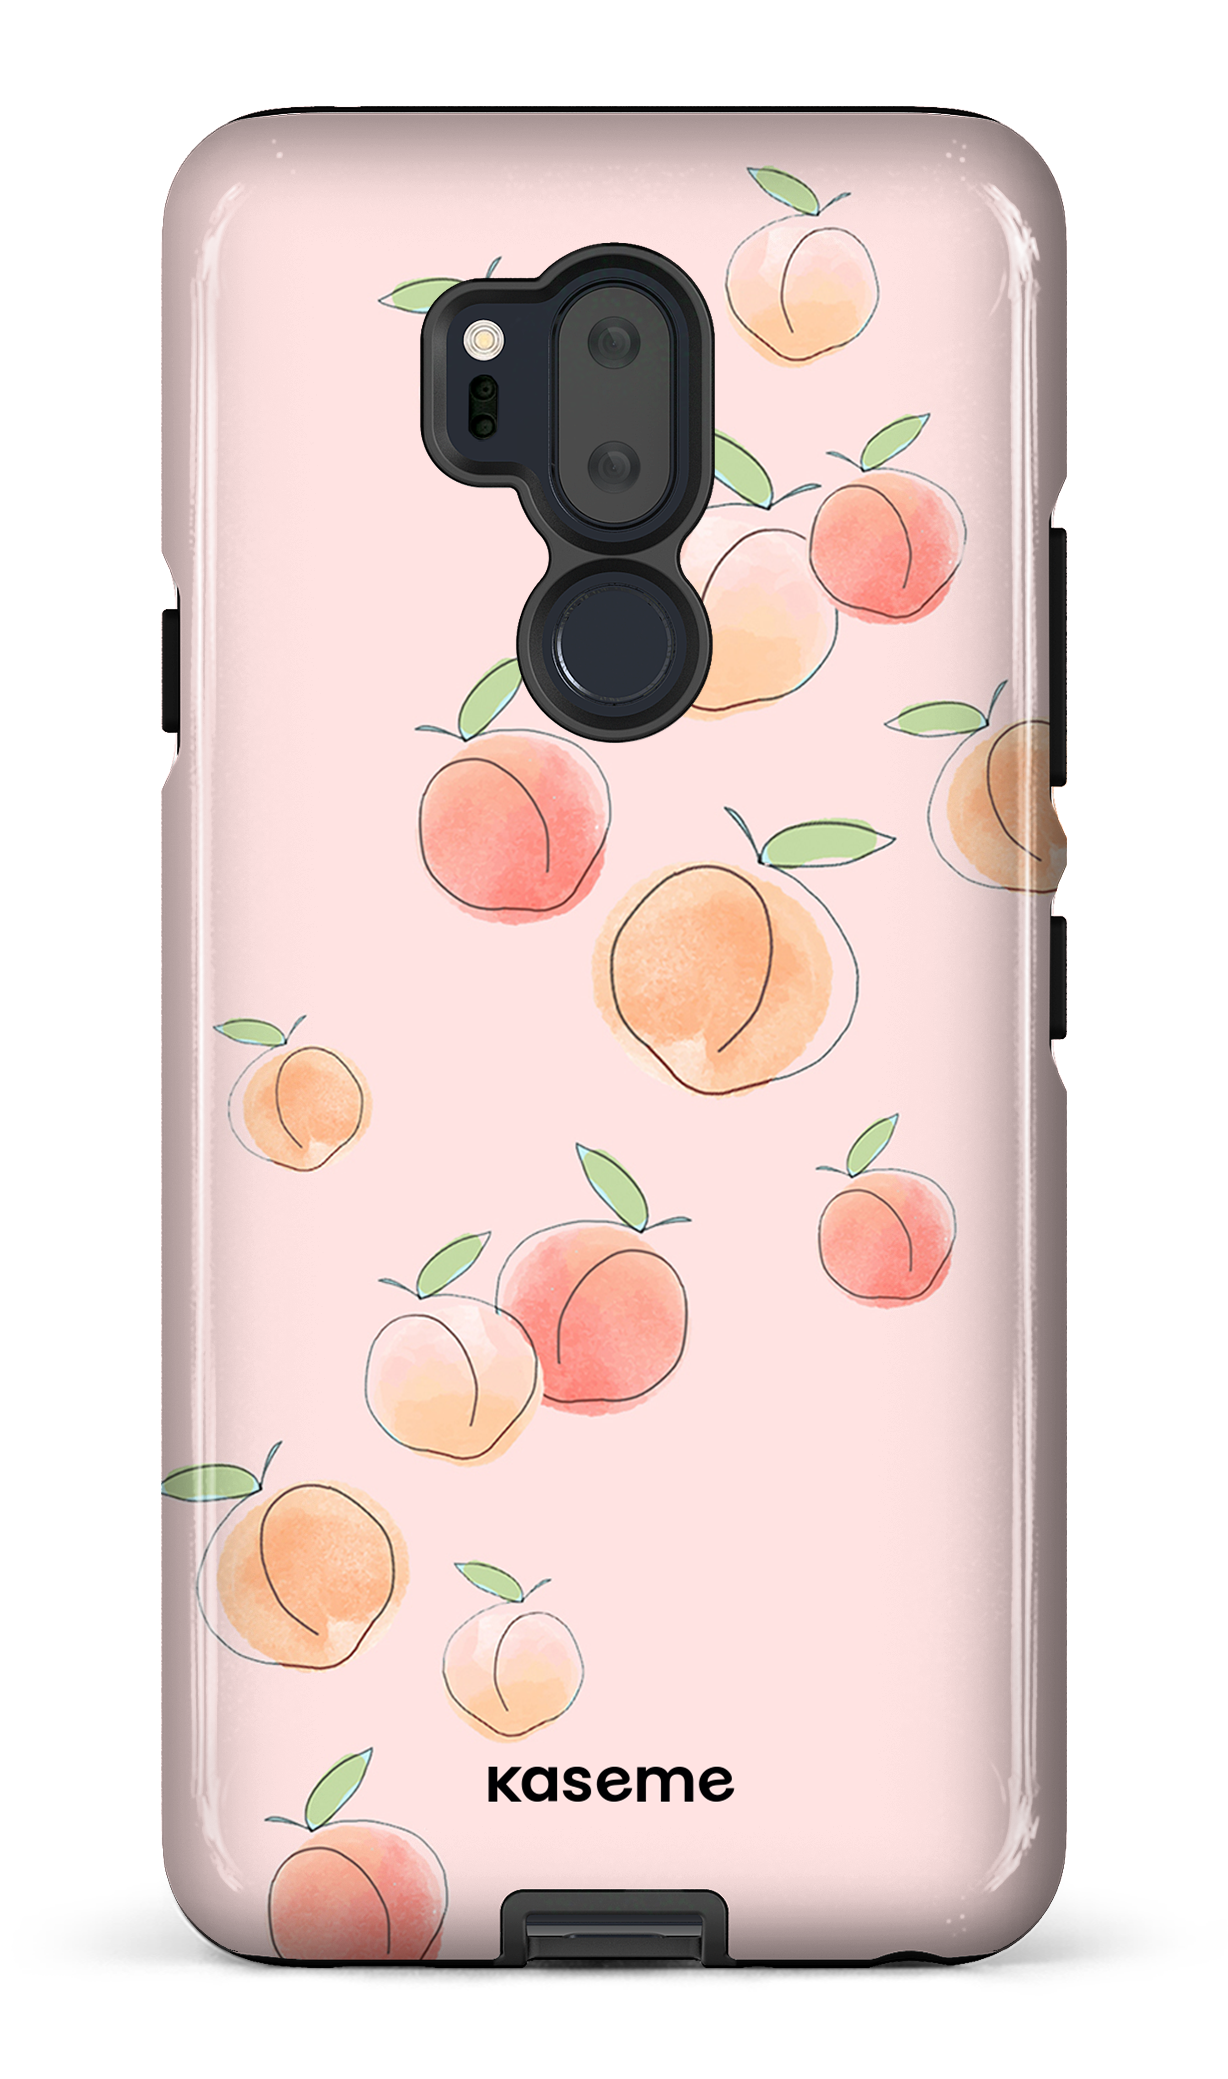 Peachy pink - LG G7